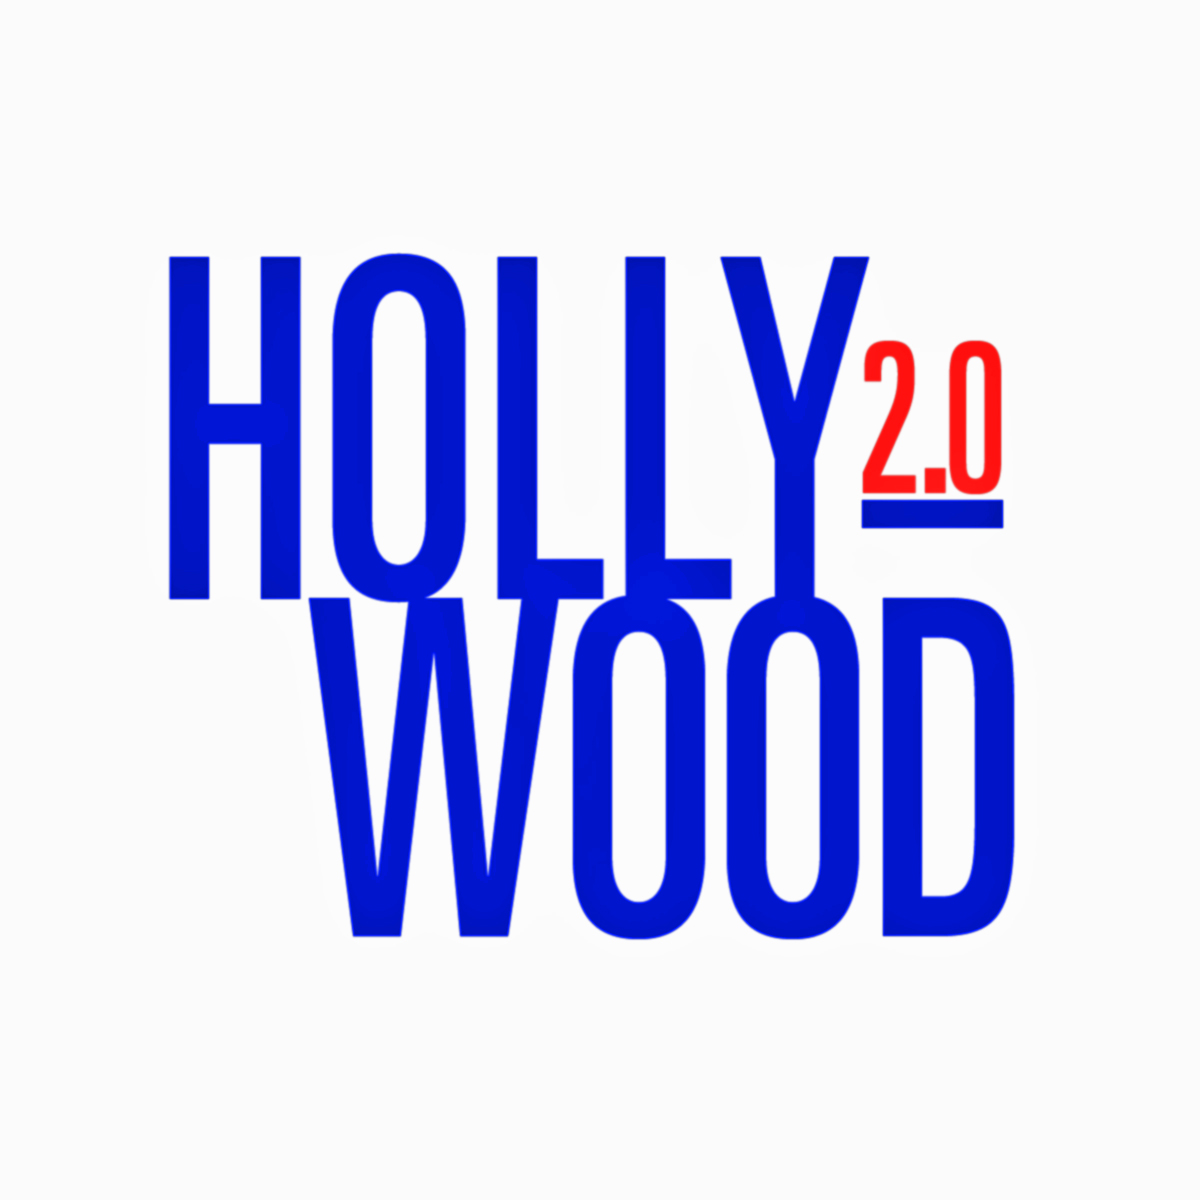 Hollywood 2.0